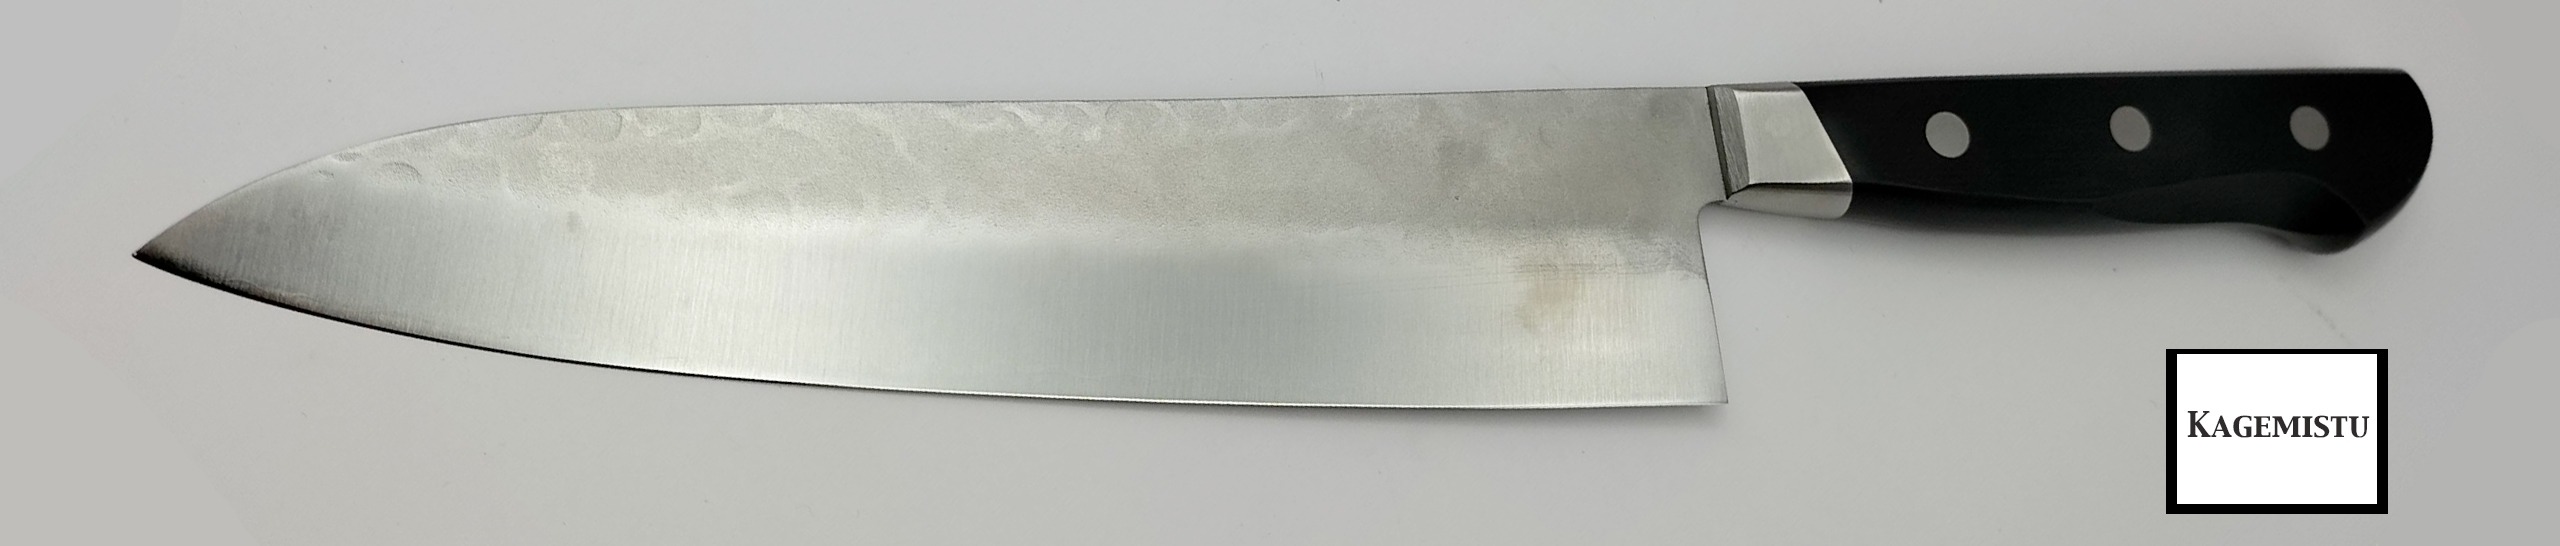 Couteau Japonais Artisanal Kagemitsu Gyuto